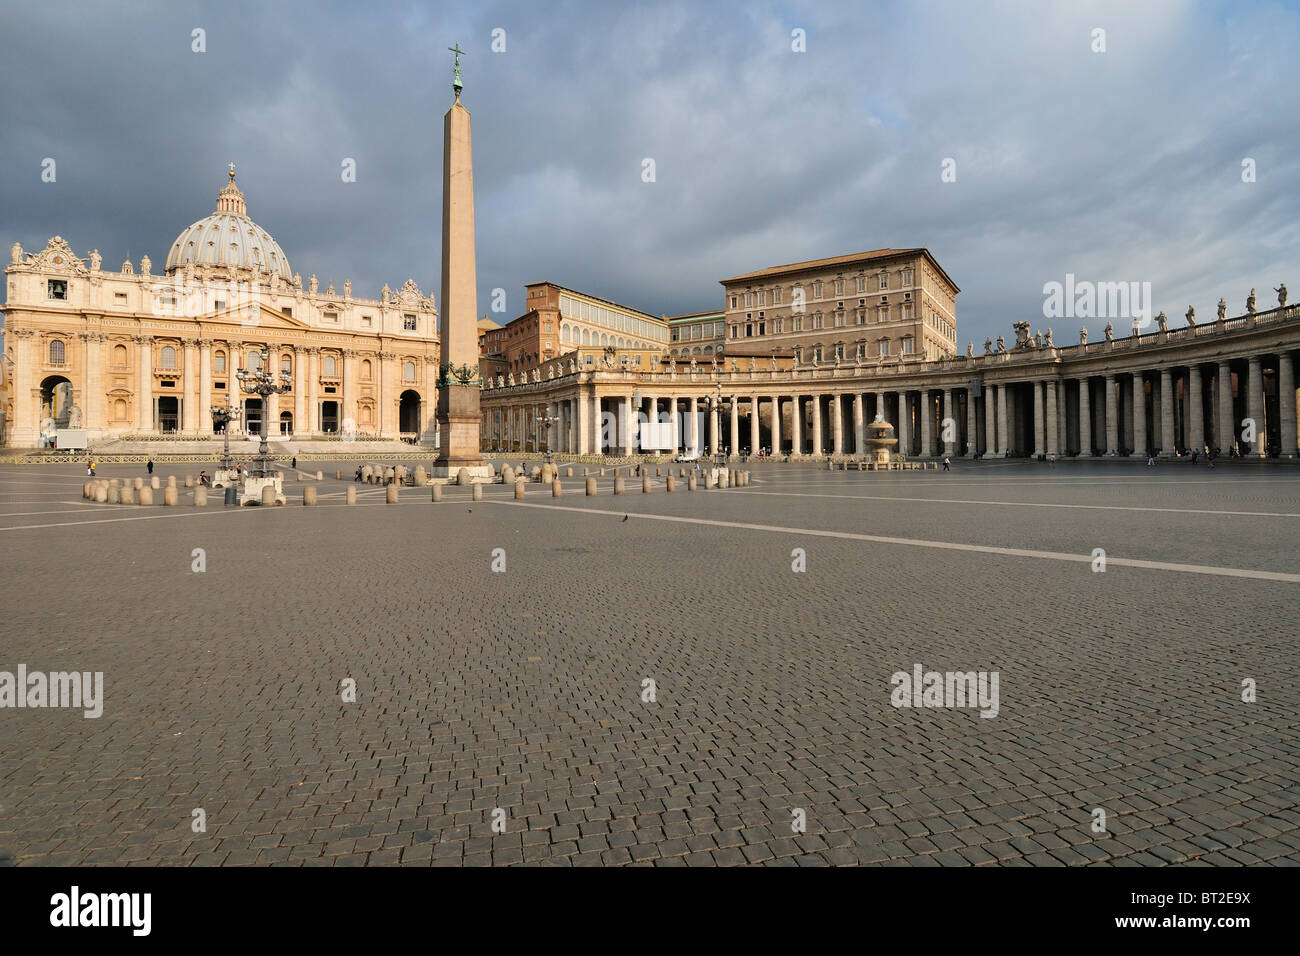 Rome. L'Italie. Basilica di San Pietro, Piazza San Pietro / St Peter's Square. Banque D'Images